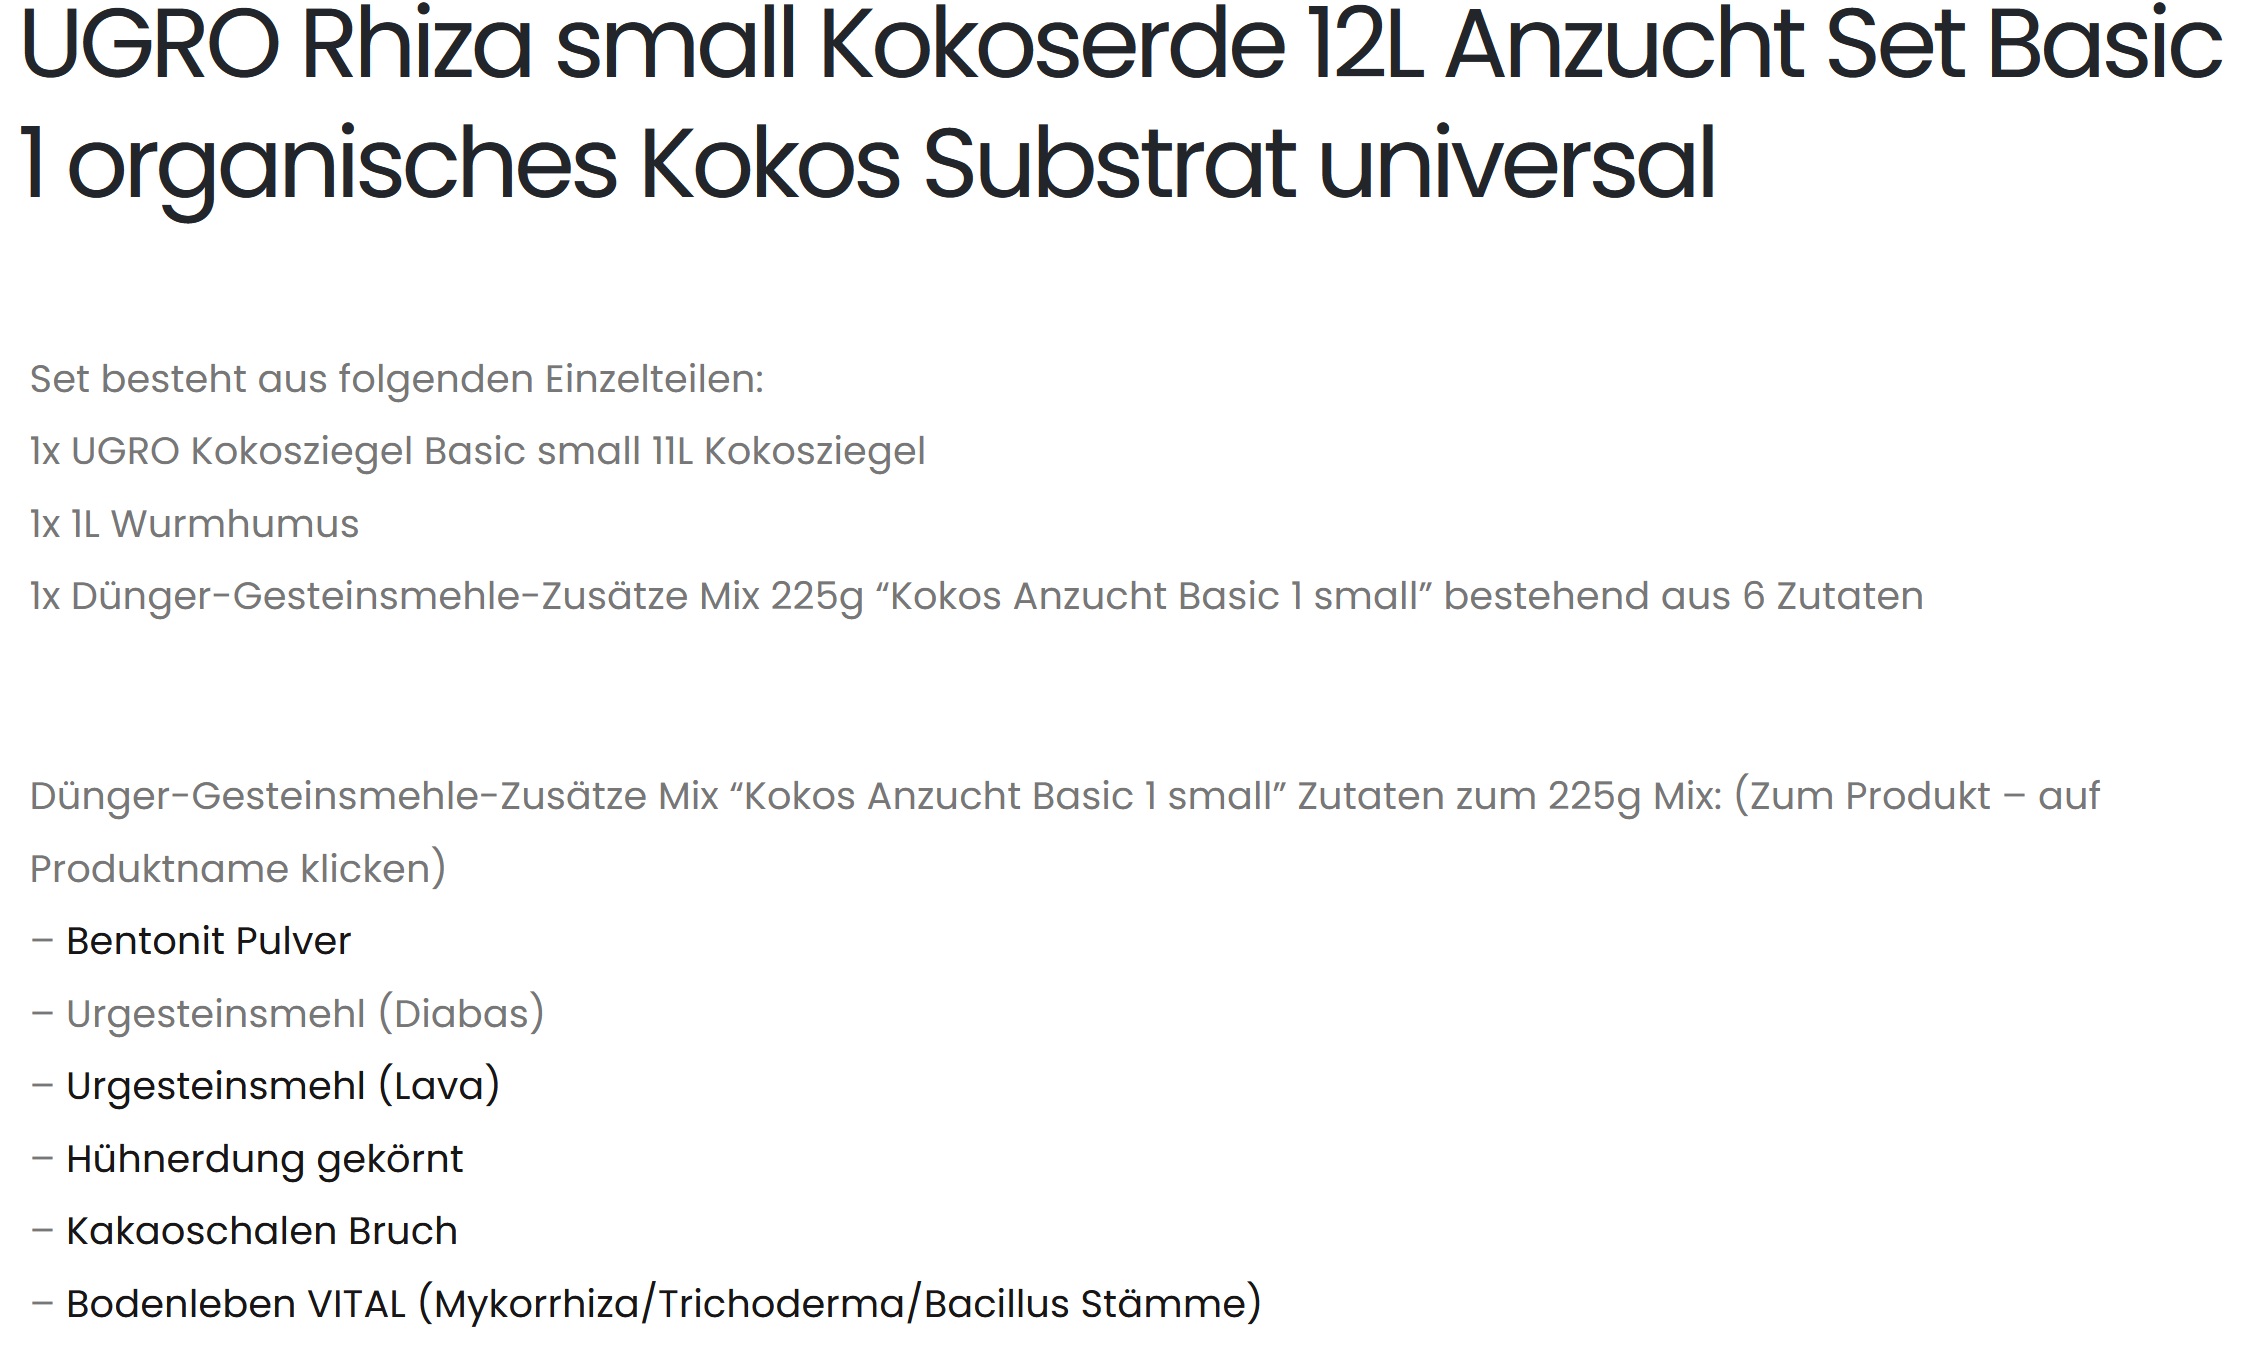 UGRO Rhiza Small Kokoserde 12L Anzucht Set Basic 1 organisches Kokos Substrat universal